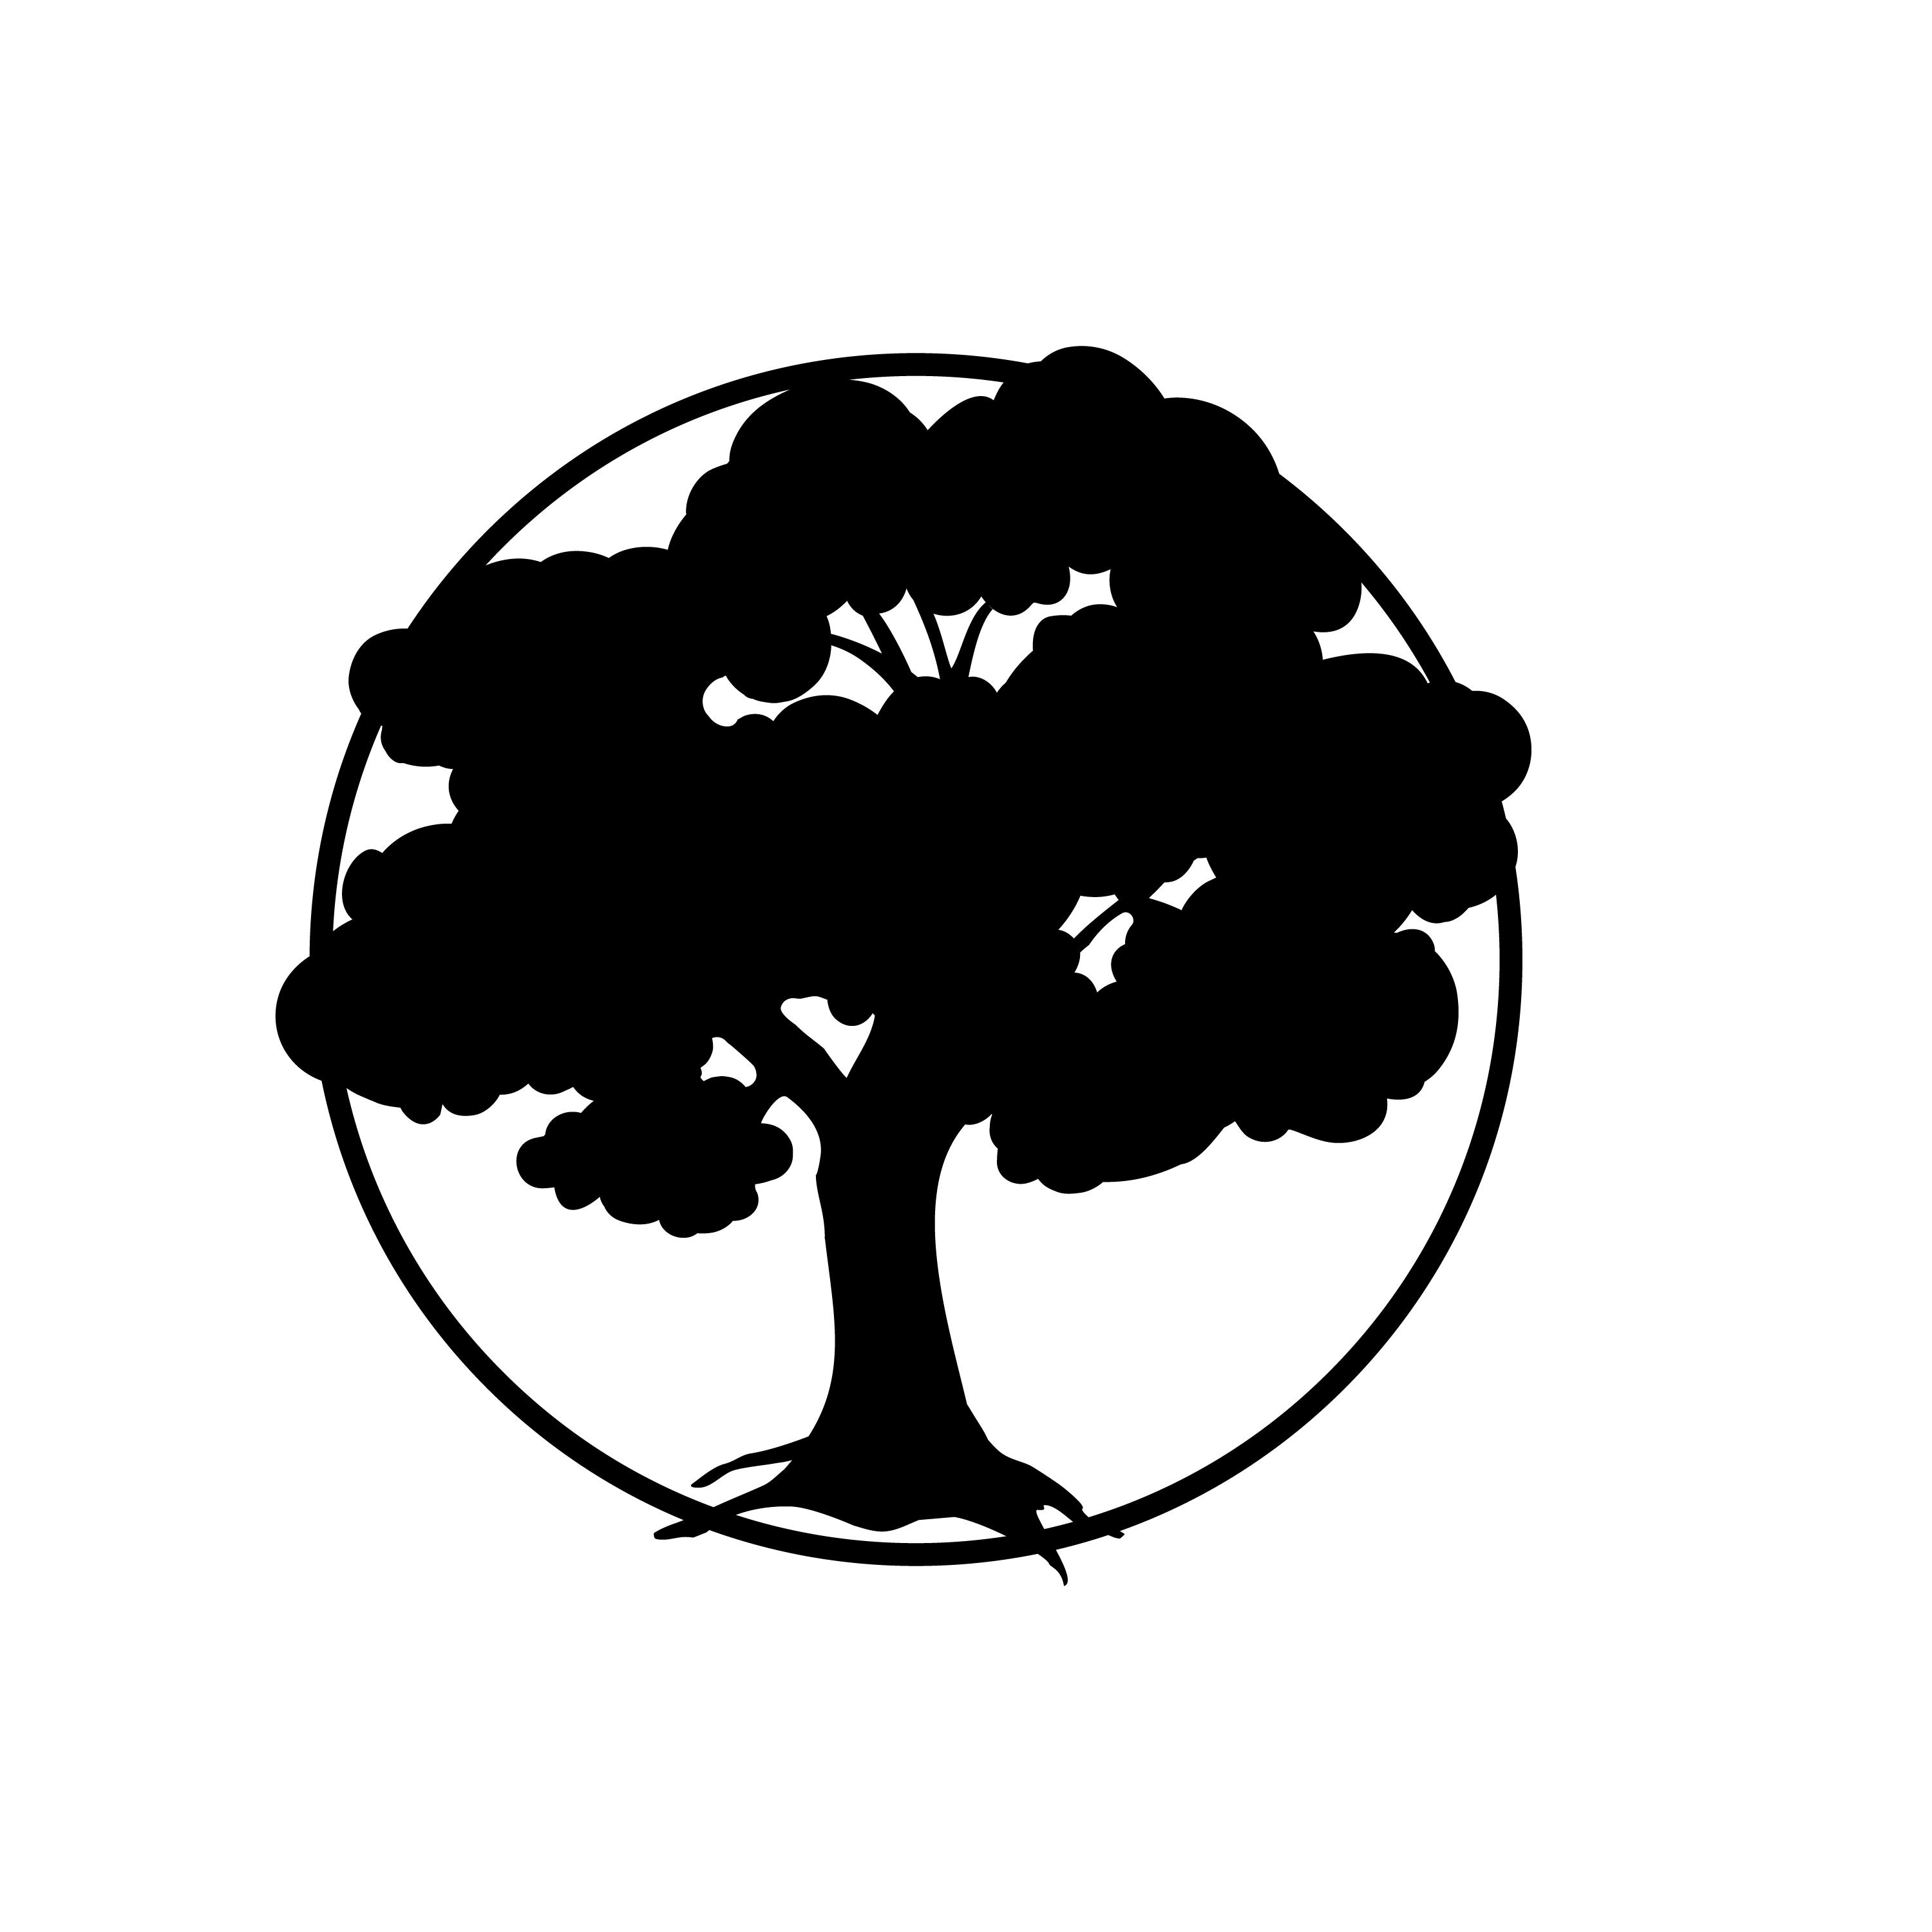 Black and White Tree in Circle Logo - Tree Design Logo | Flying Cloud Design Shop | Royalty-Free